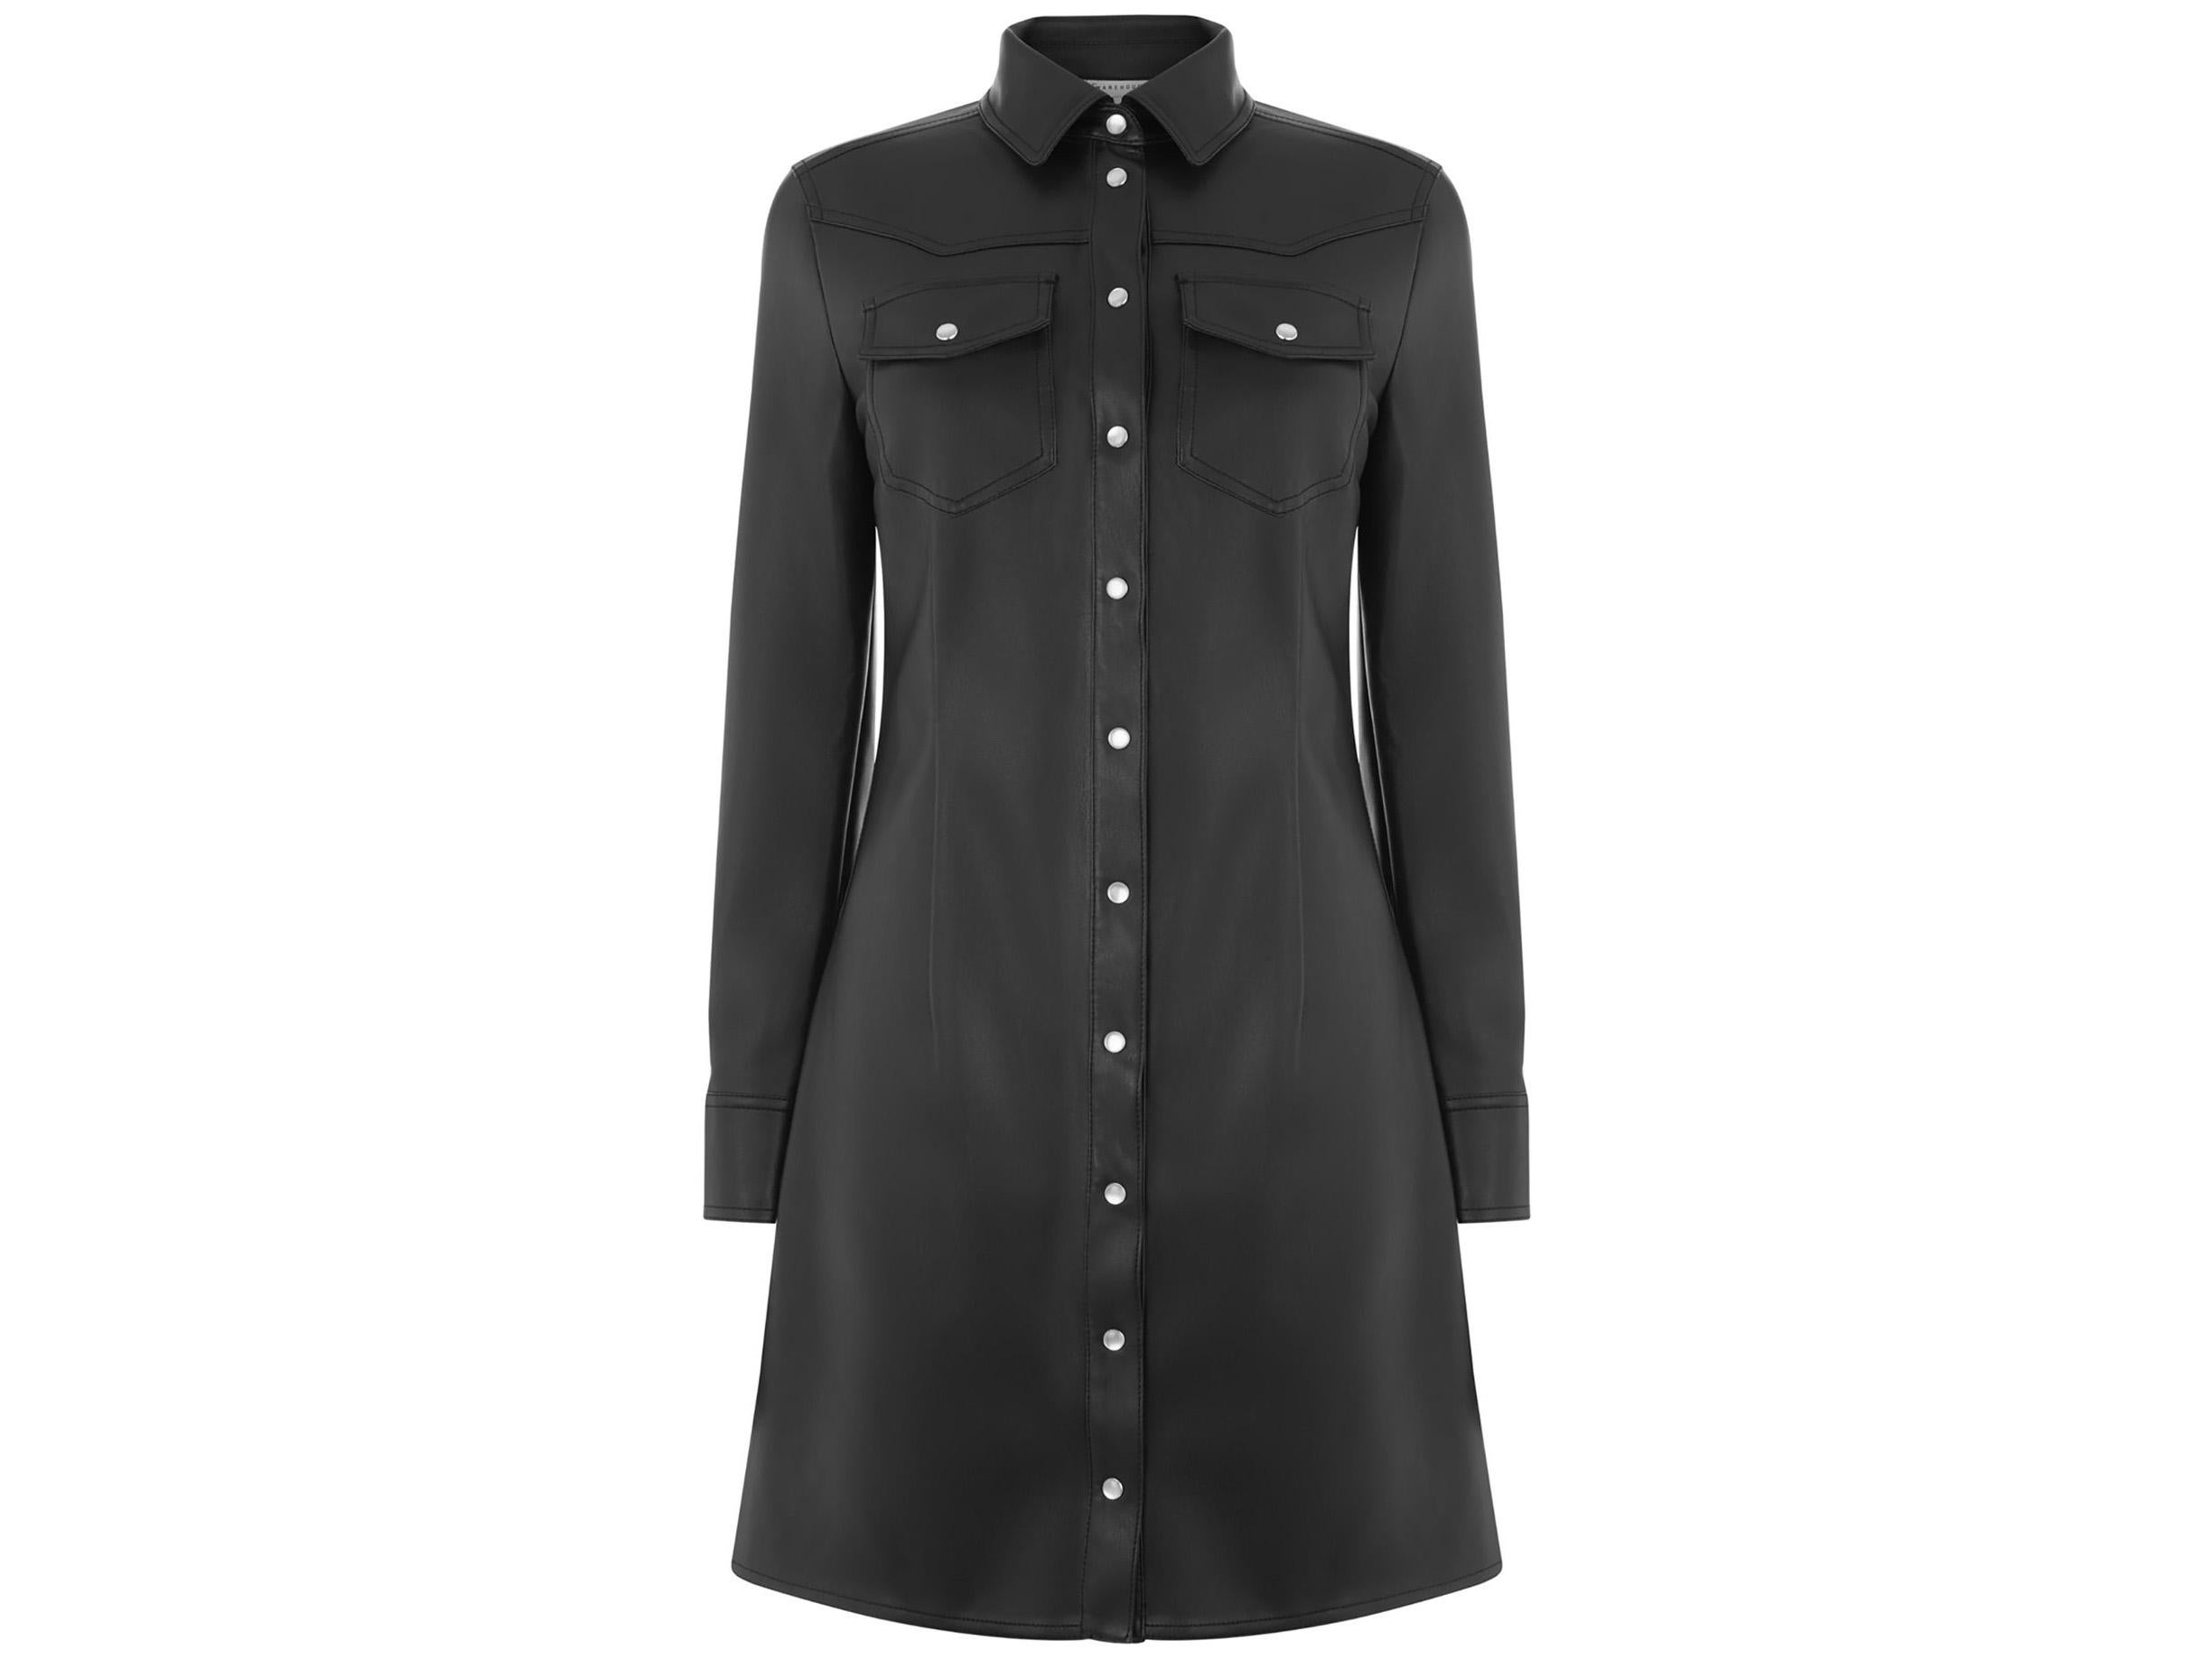 Faux Leather Western Dress, £56, Warehouse